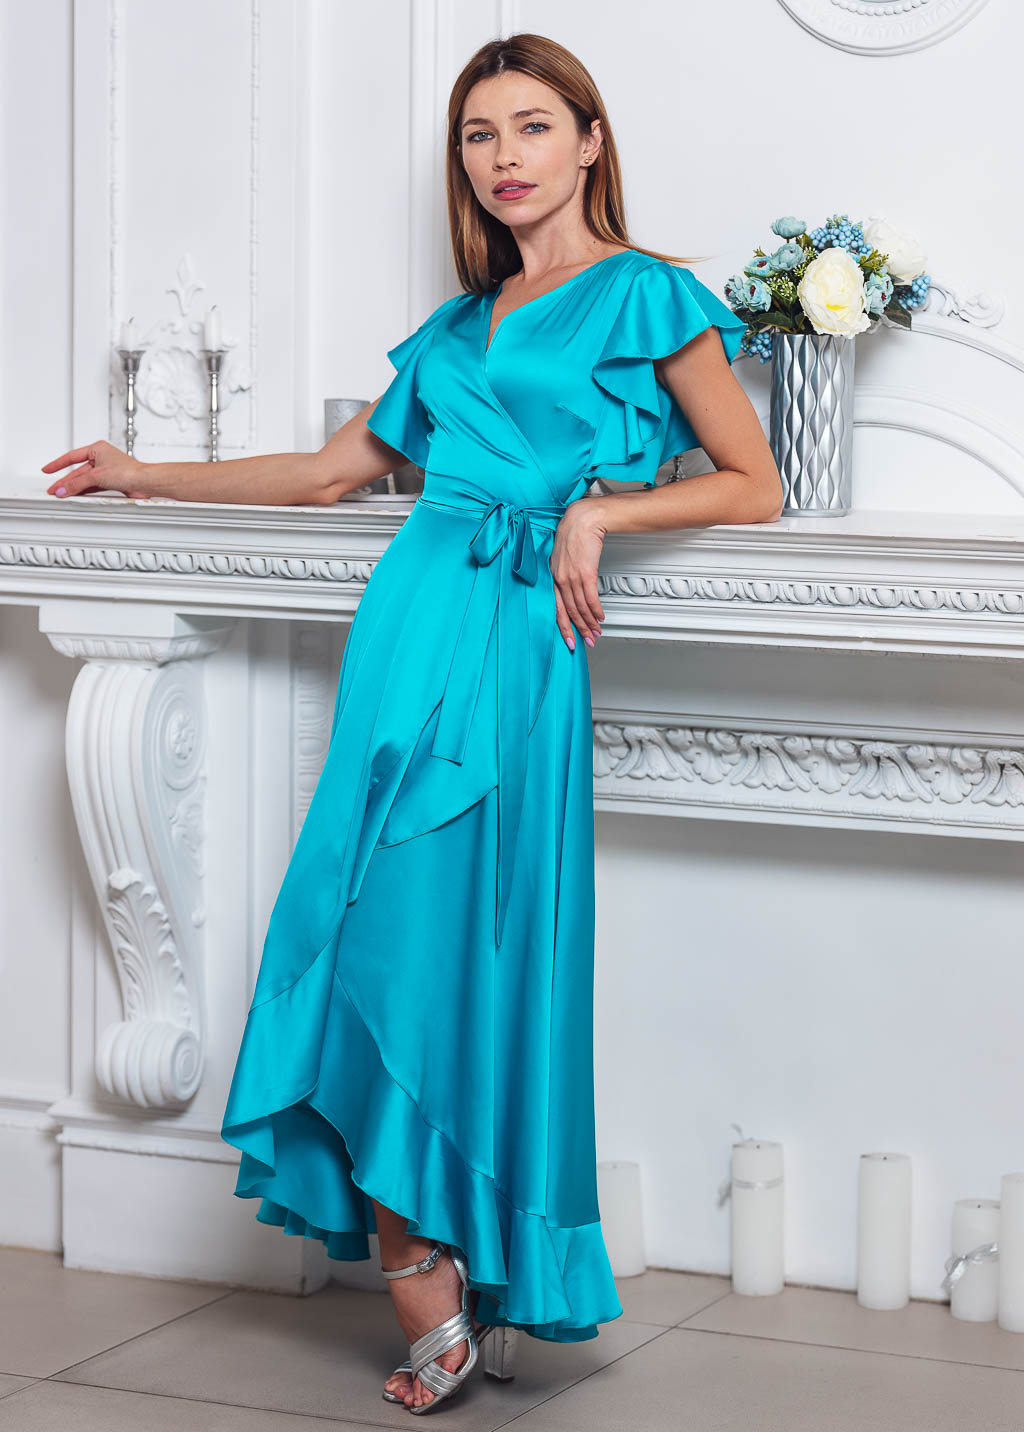 Turquoise wrap dress